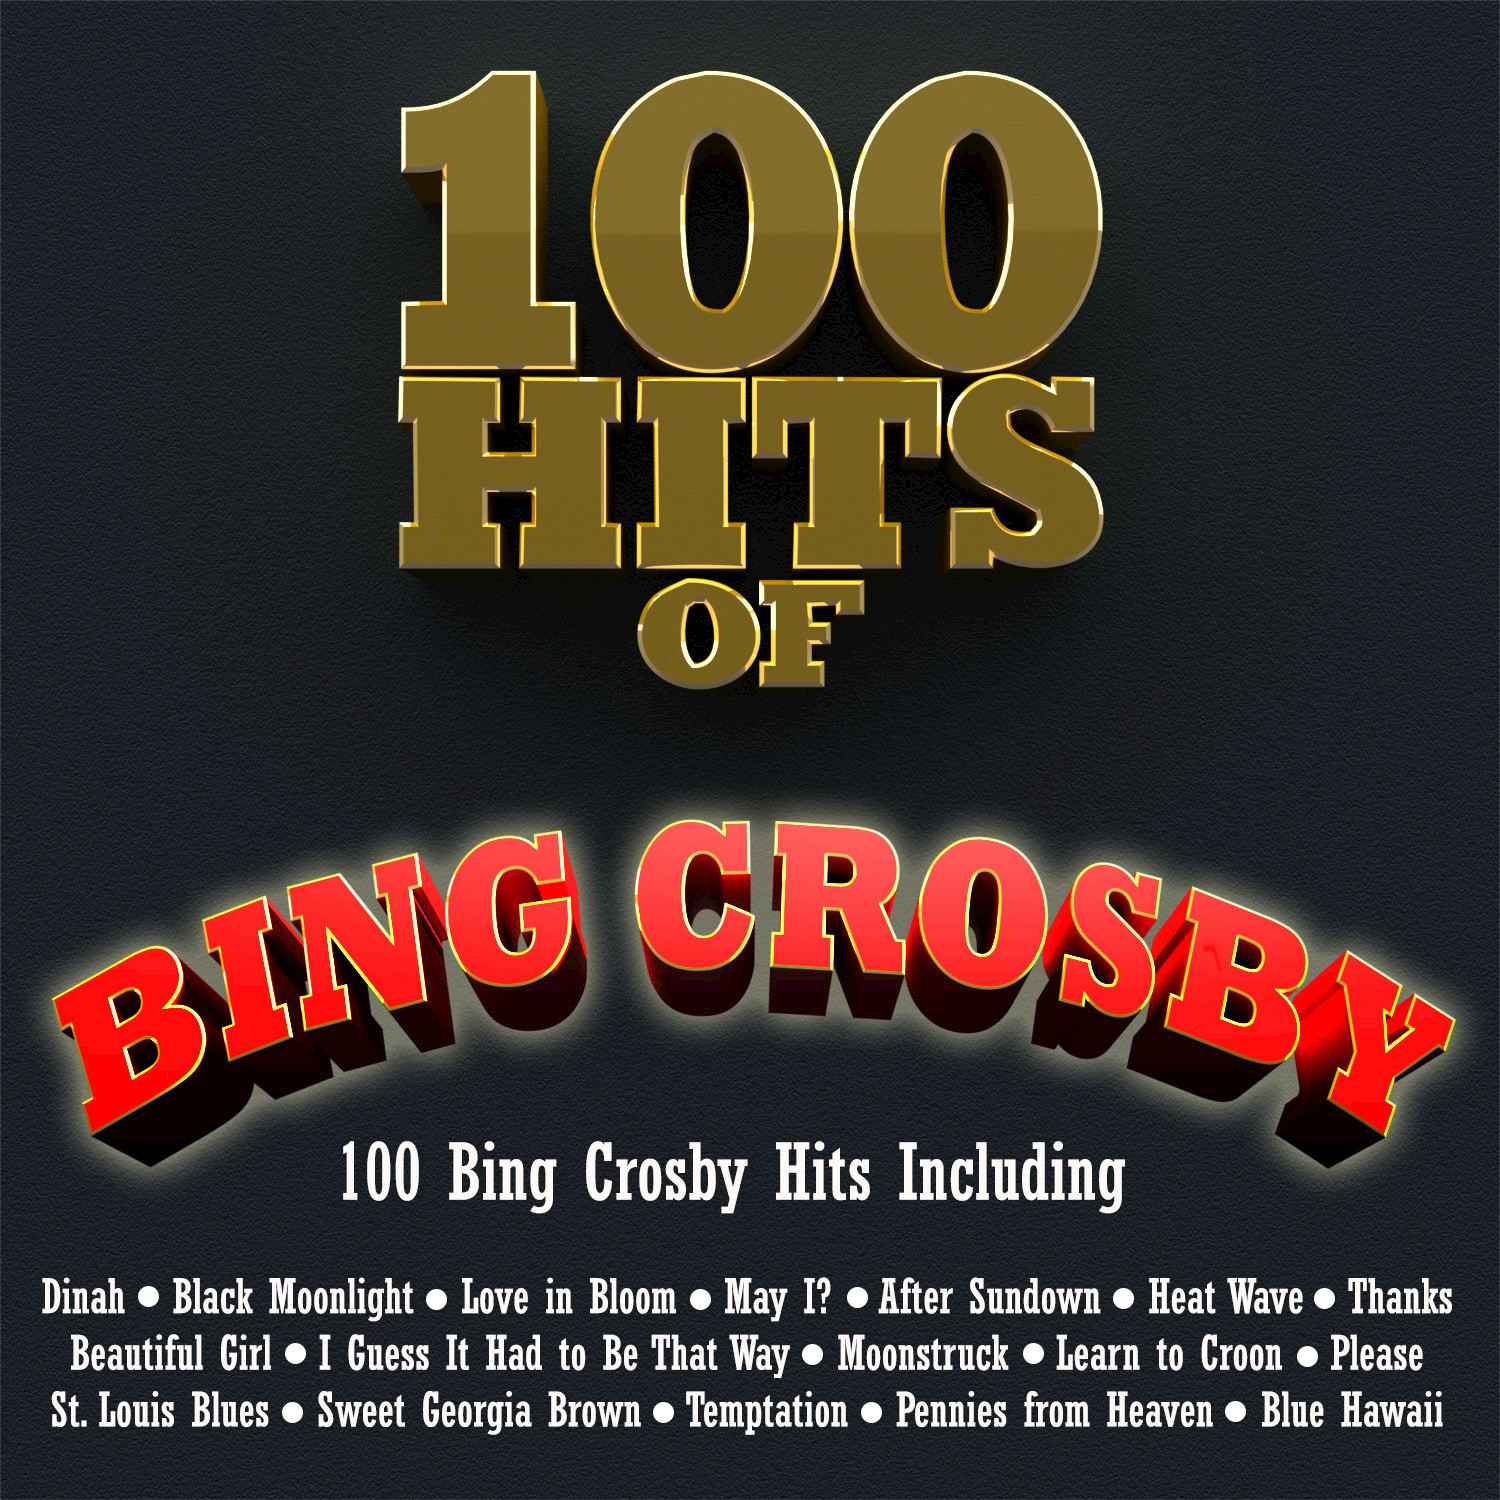 100 Hits of Bing Crosby